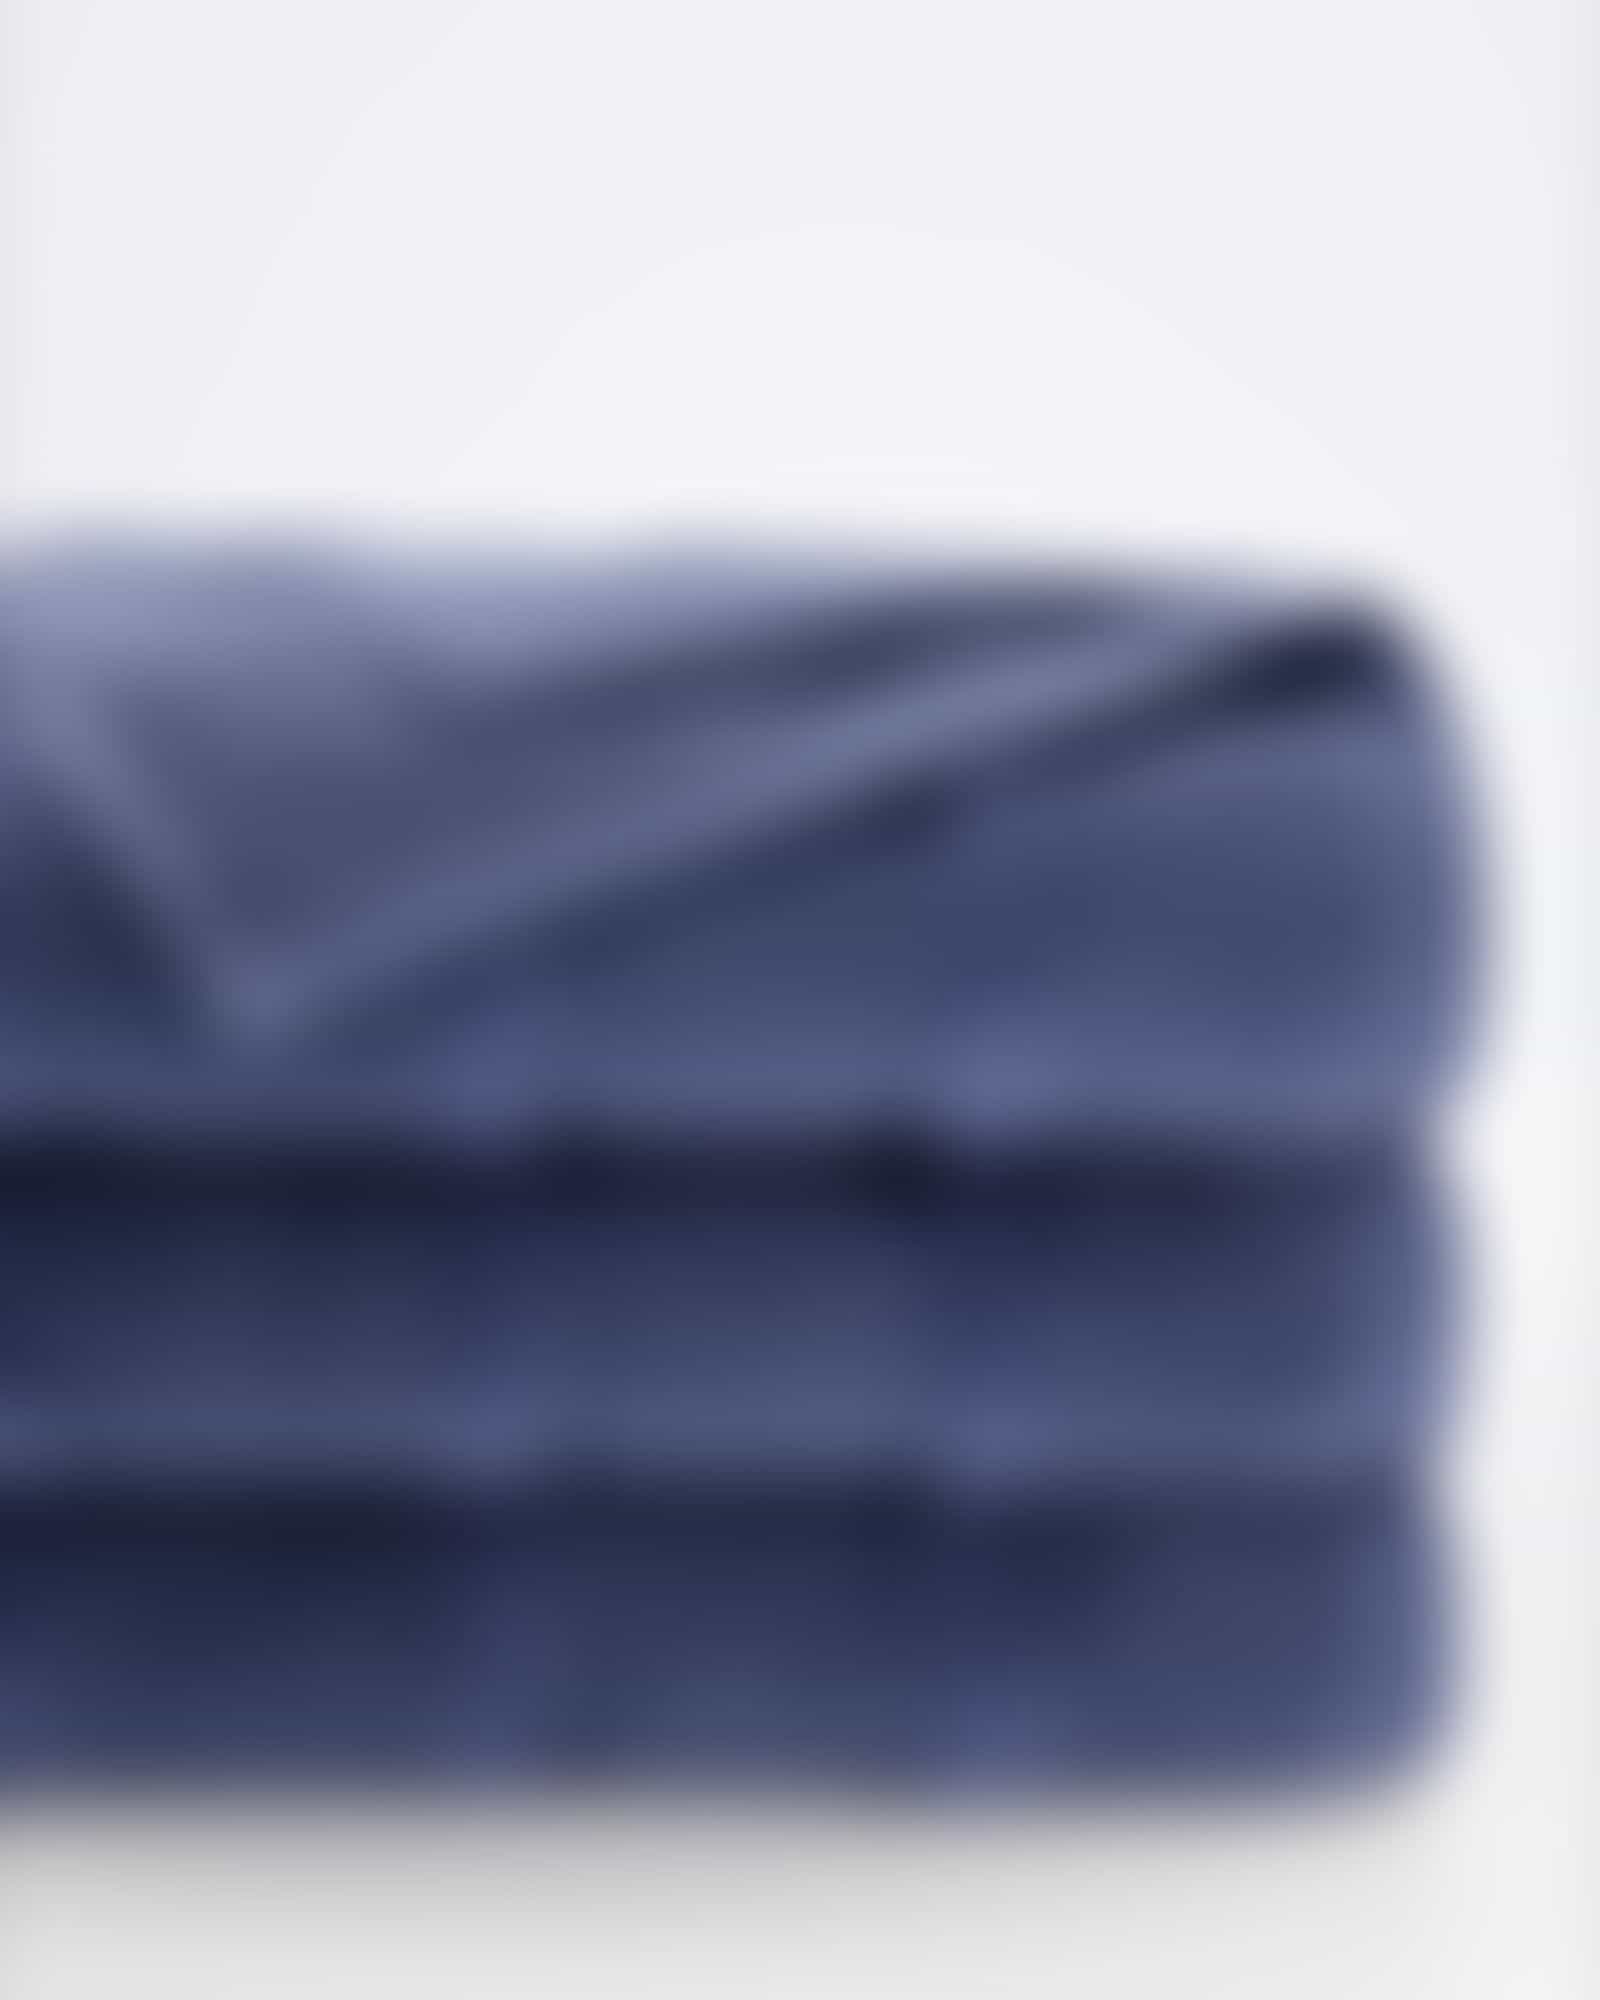 Cawö Handtücher Noblesse2 Uni 1002 - Farbe: nachtblau - 111 - Duschtuch 80x160 cm